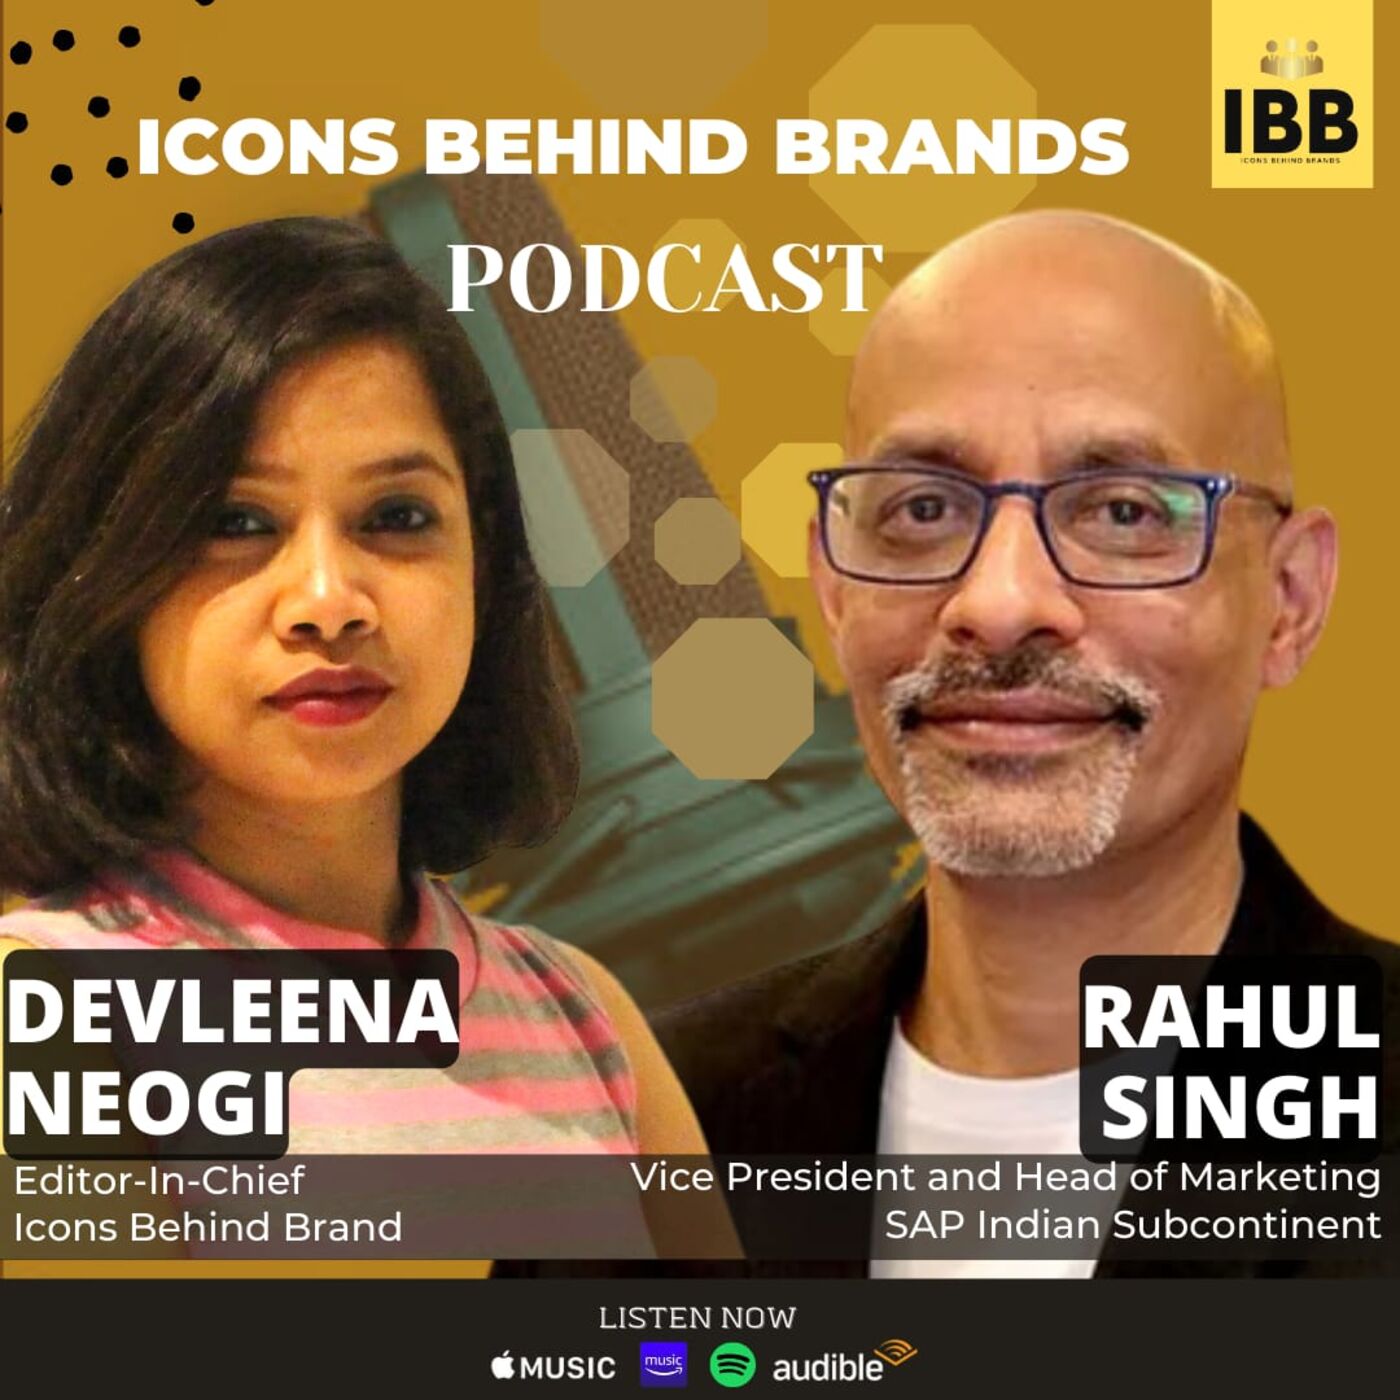 Brand And Marketing Insights| Mr. Rahul Singh| VP and Head of Marketing, SAP| IBB